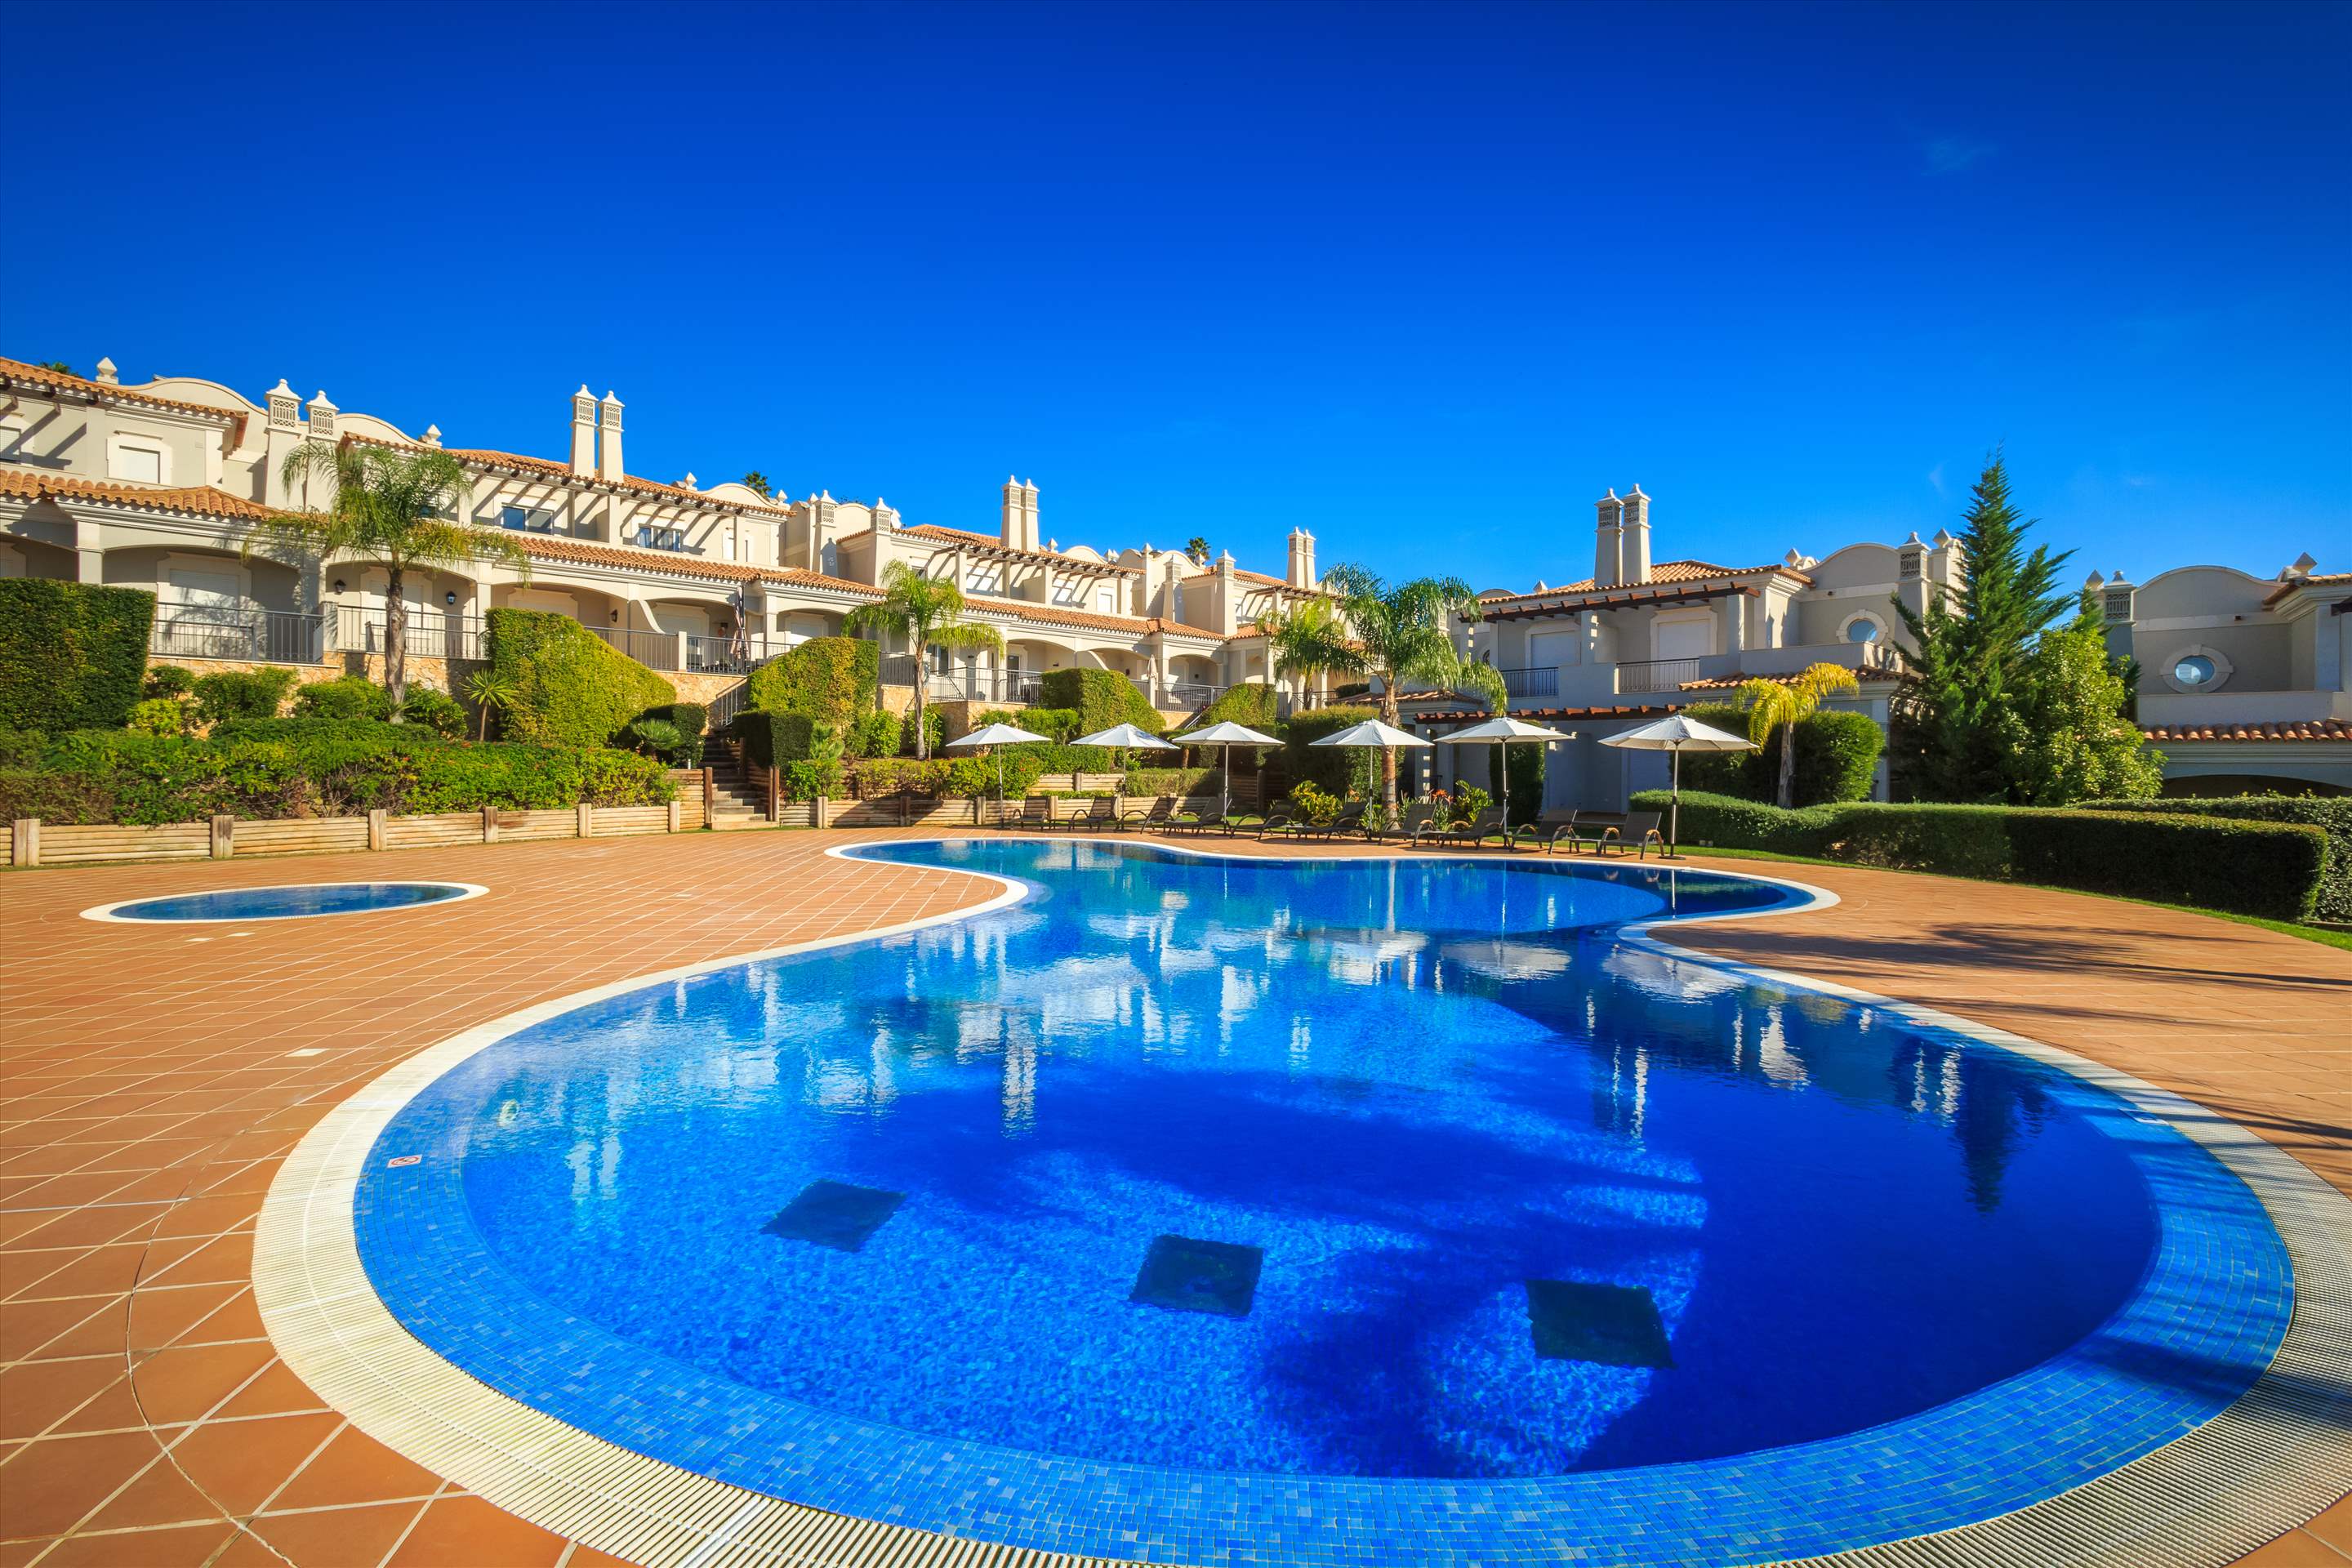 The Crest Townhouse, Three Bedroom Rate, 3 bedroom villa in Quinta do Lago, Algarve